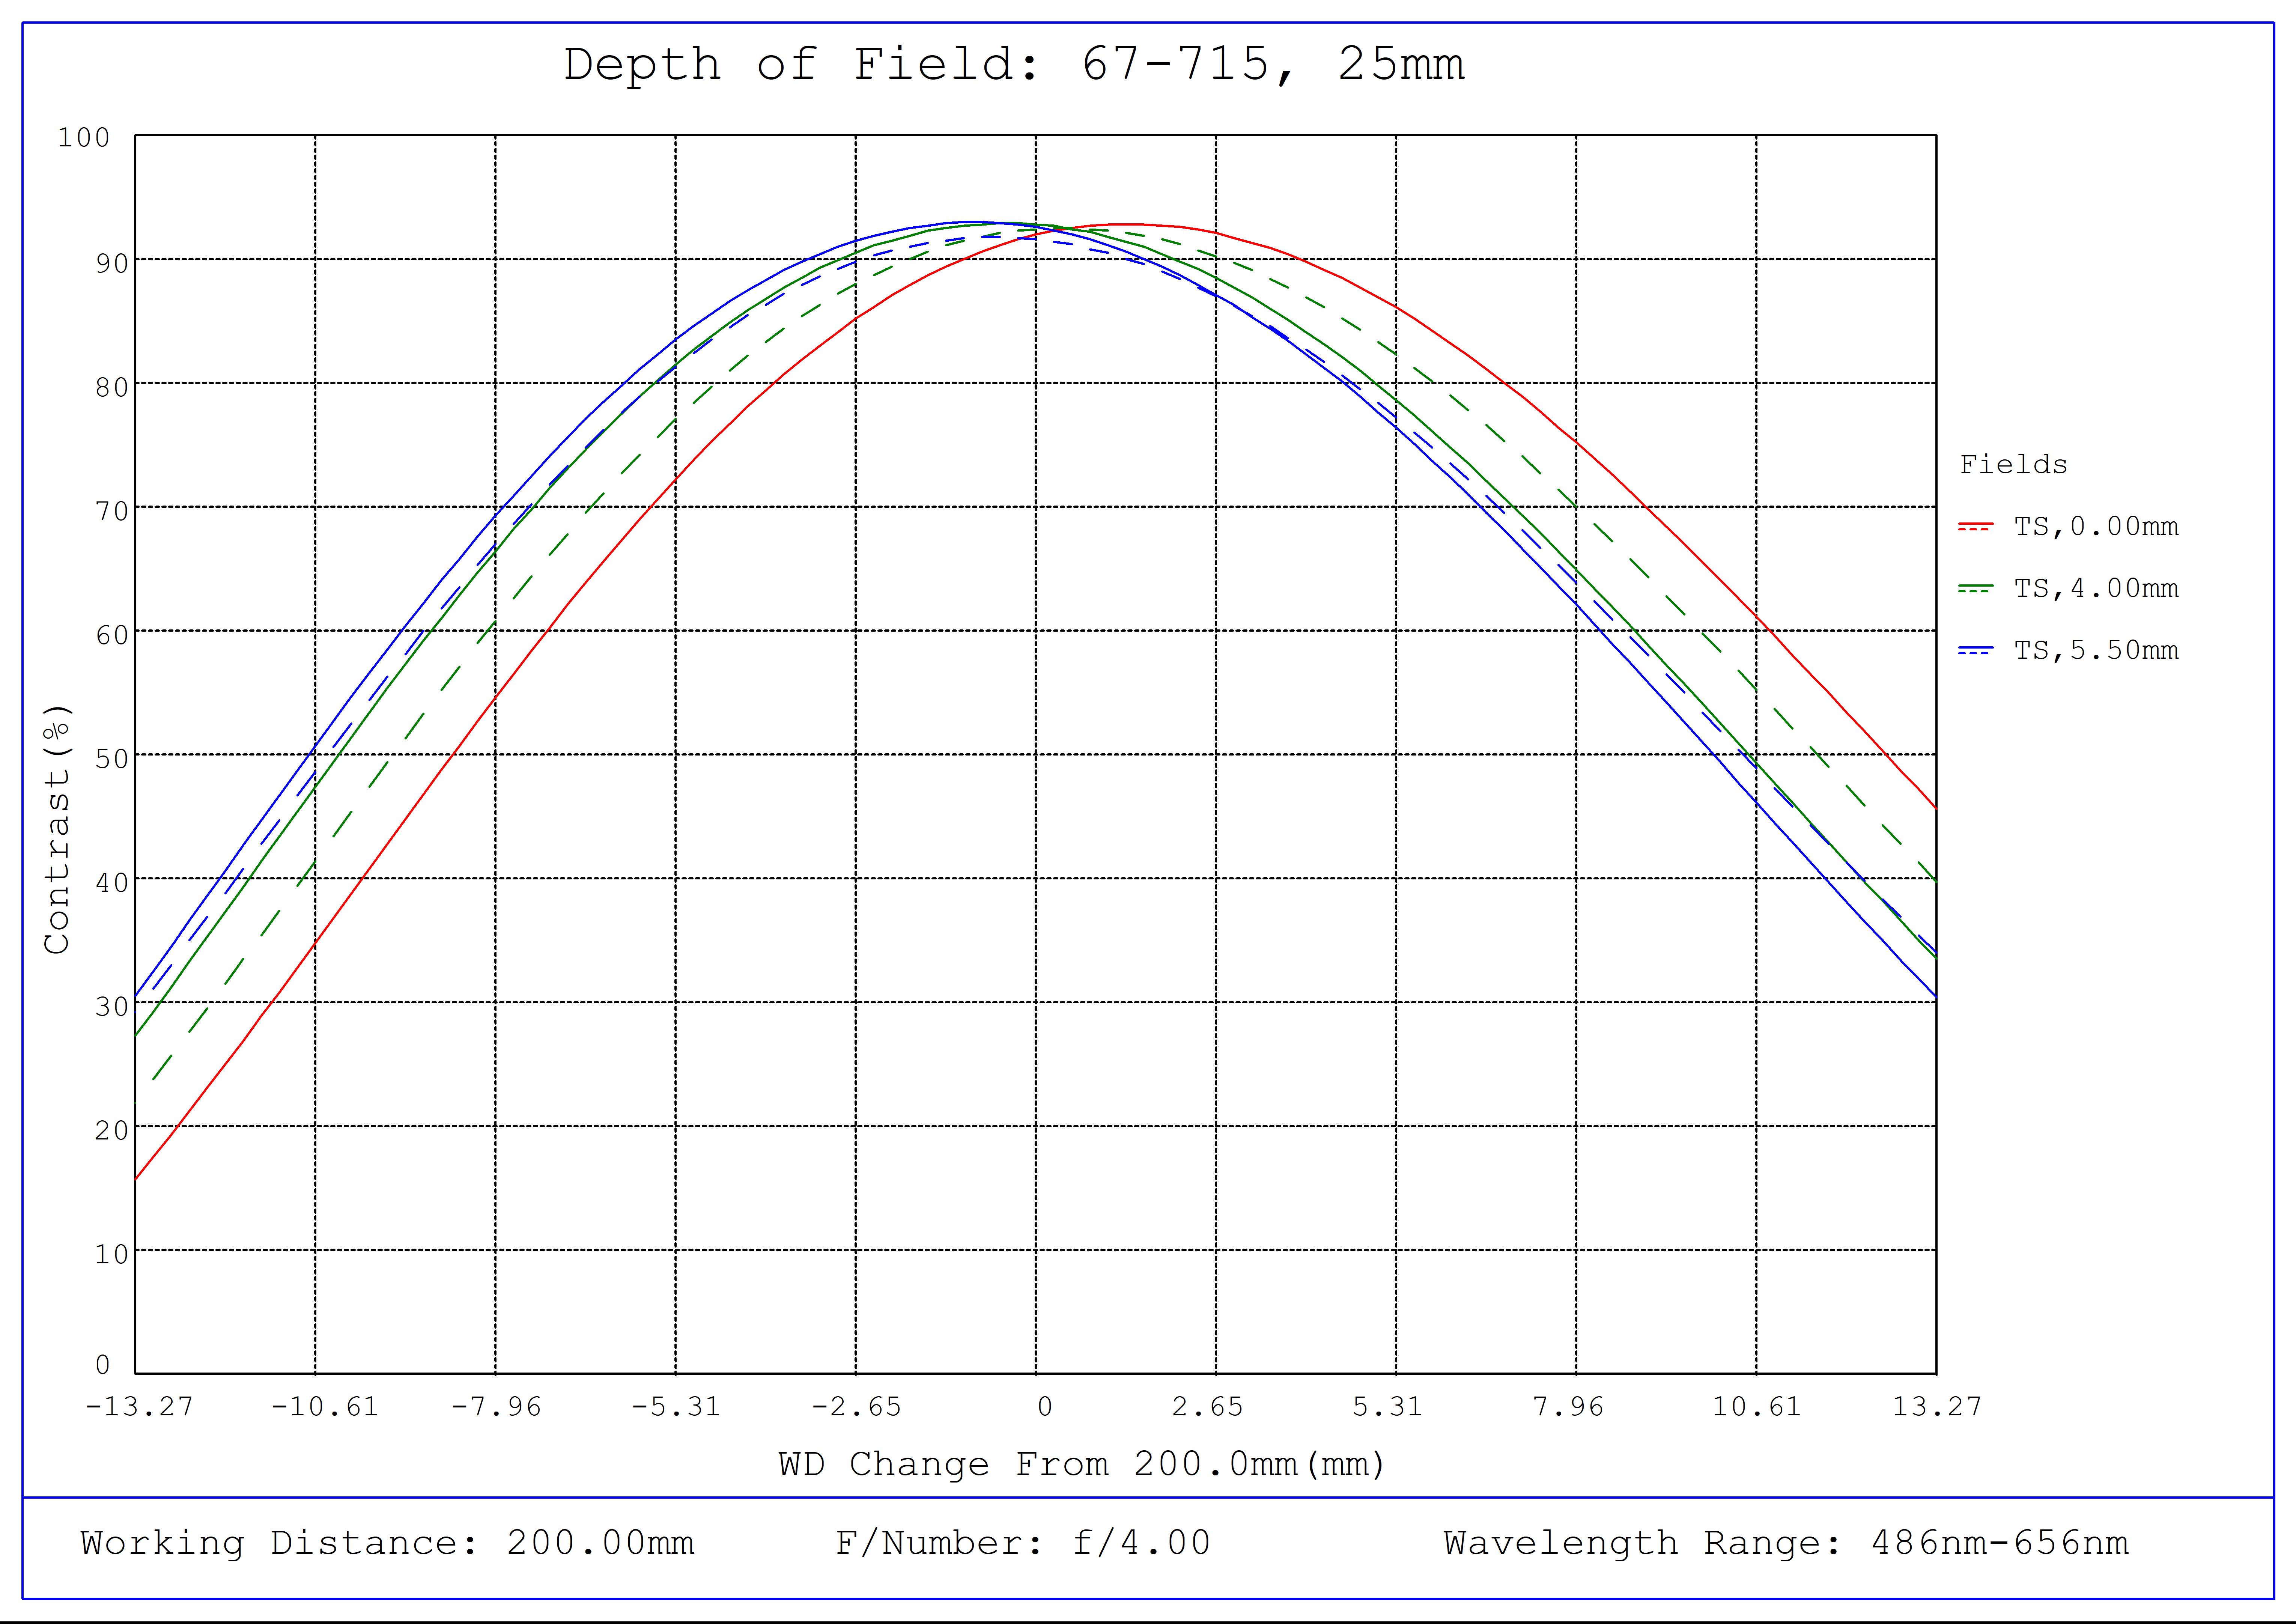 #67-715, 25mm C VIS-NIR Series Fixed Focal Length Lens, Depth of Field Plot, 200mm Working Distance, f4